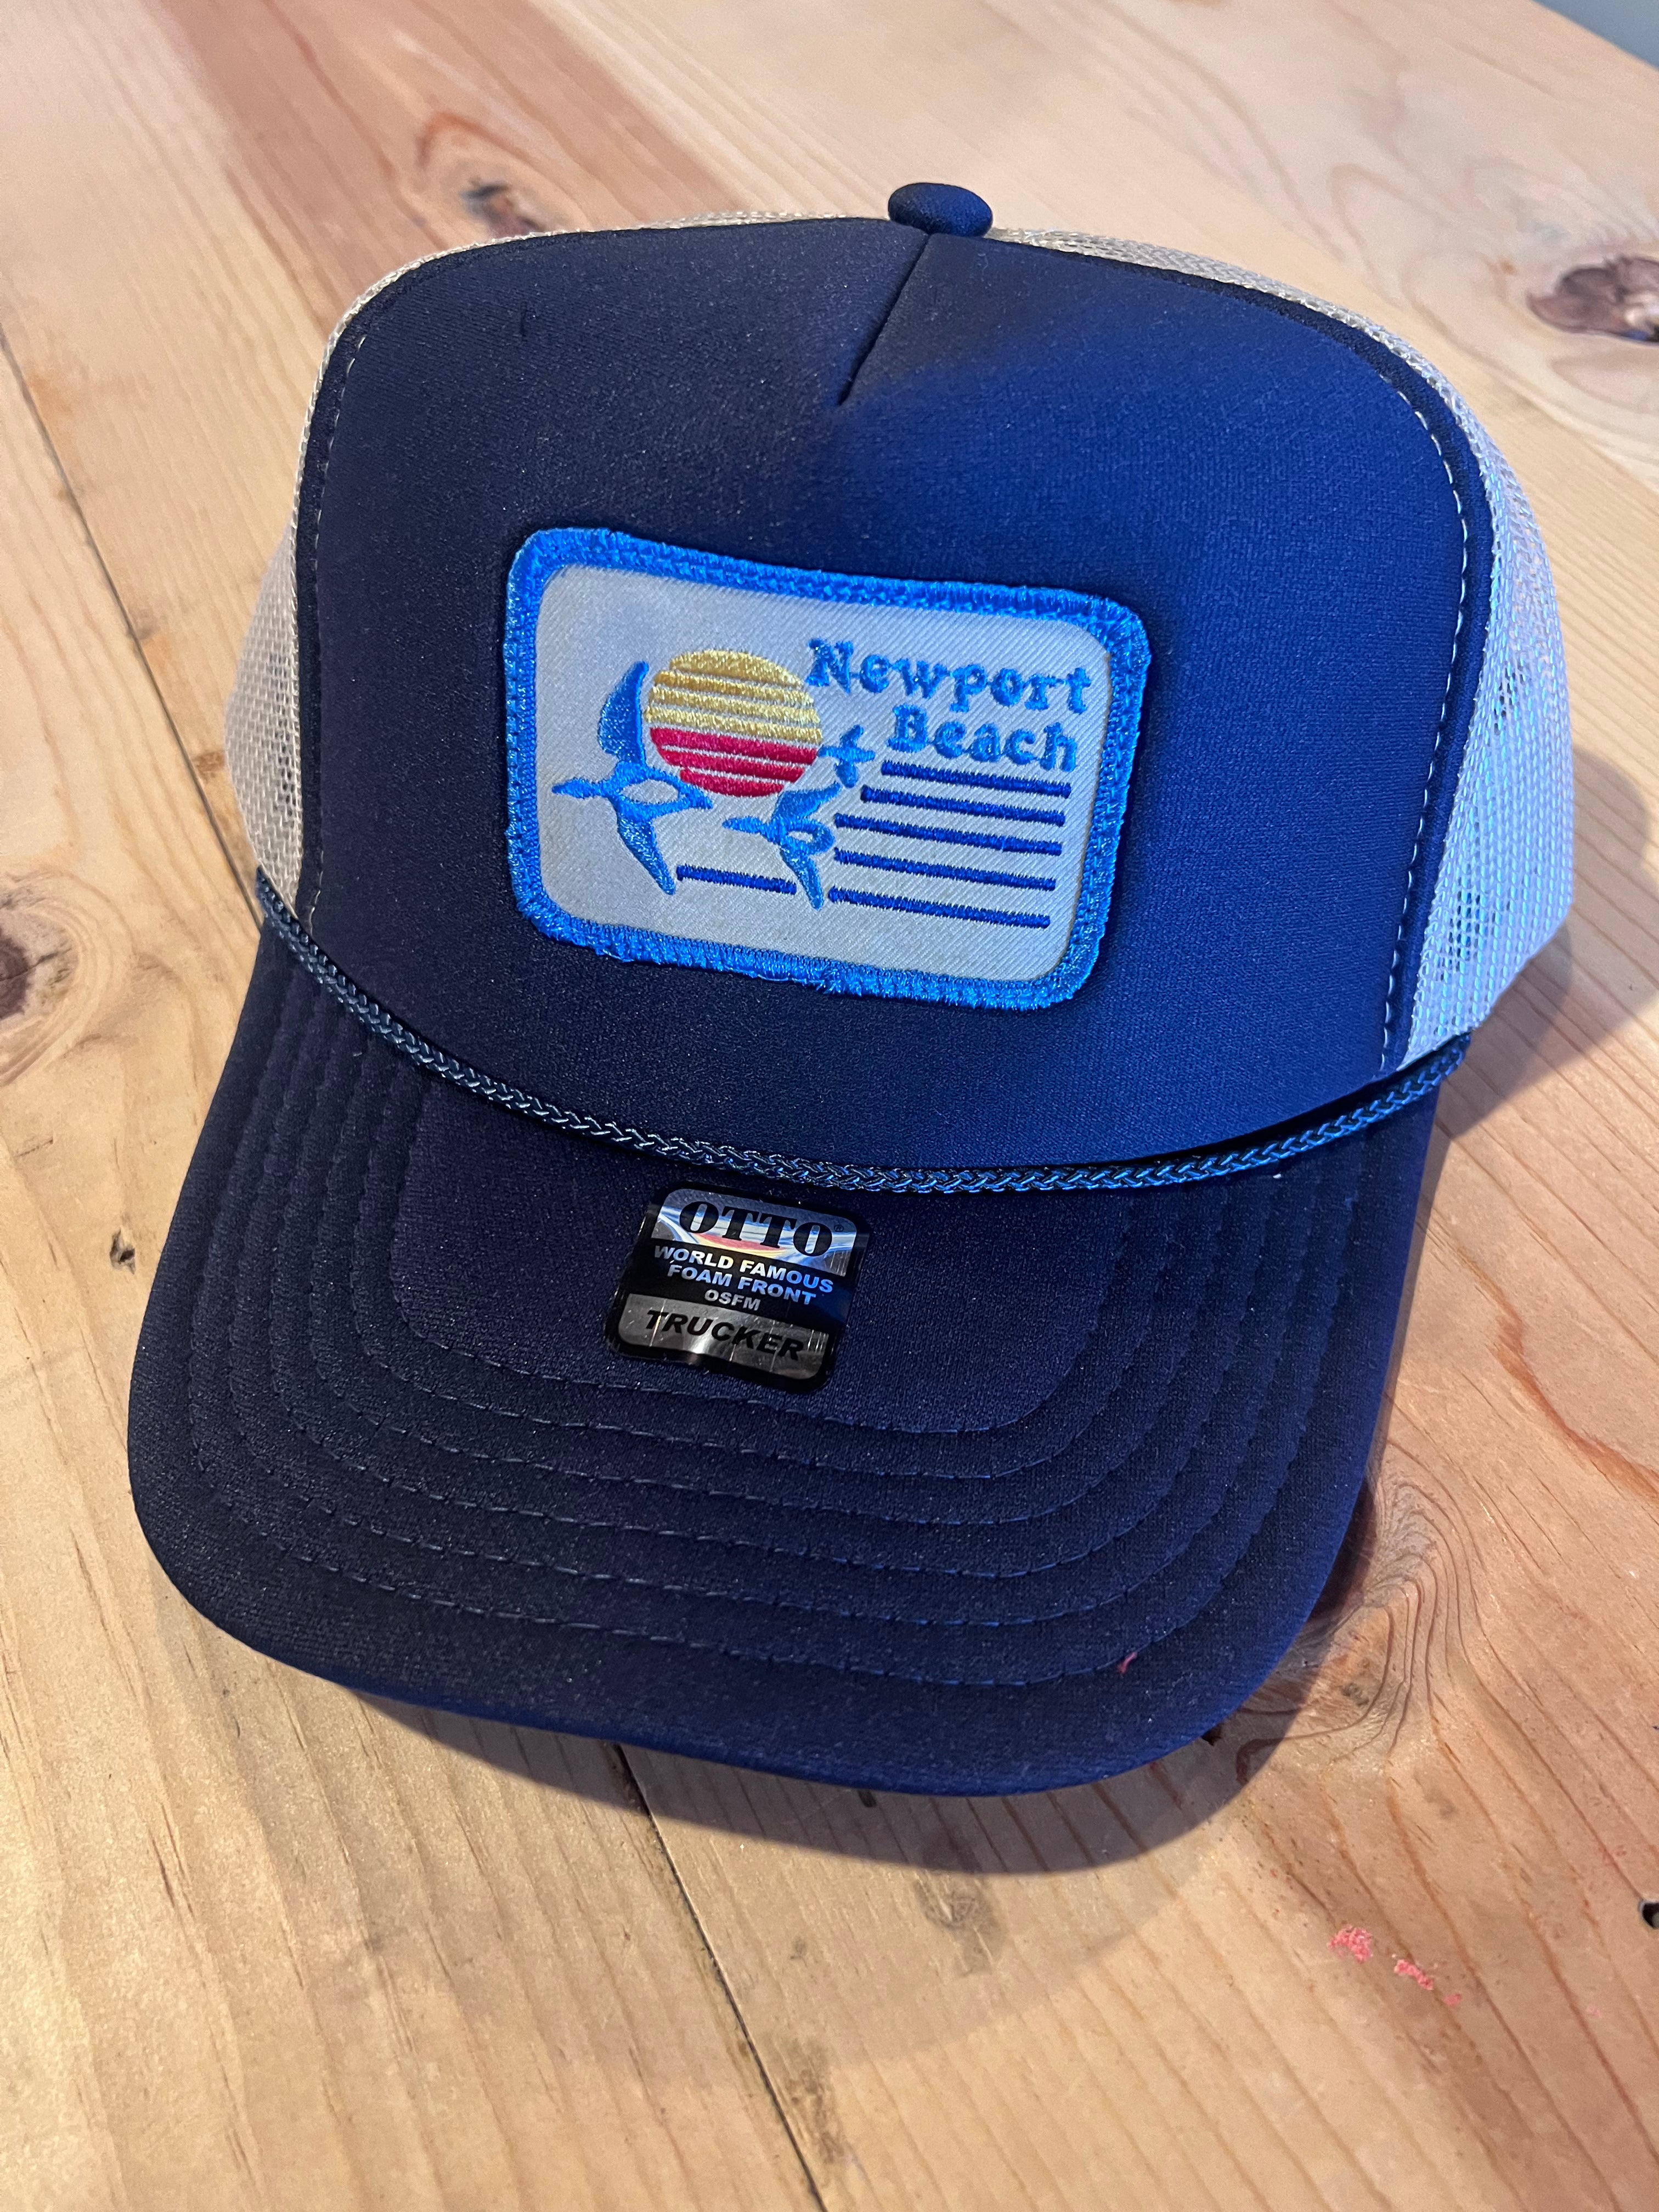 Newport Beach Trucker Hat